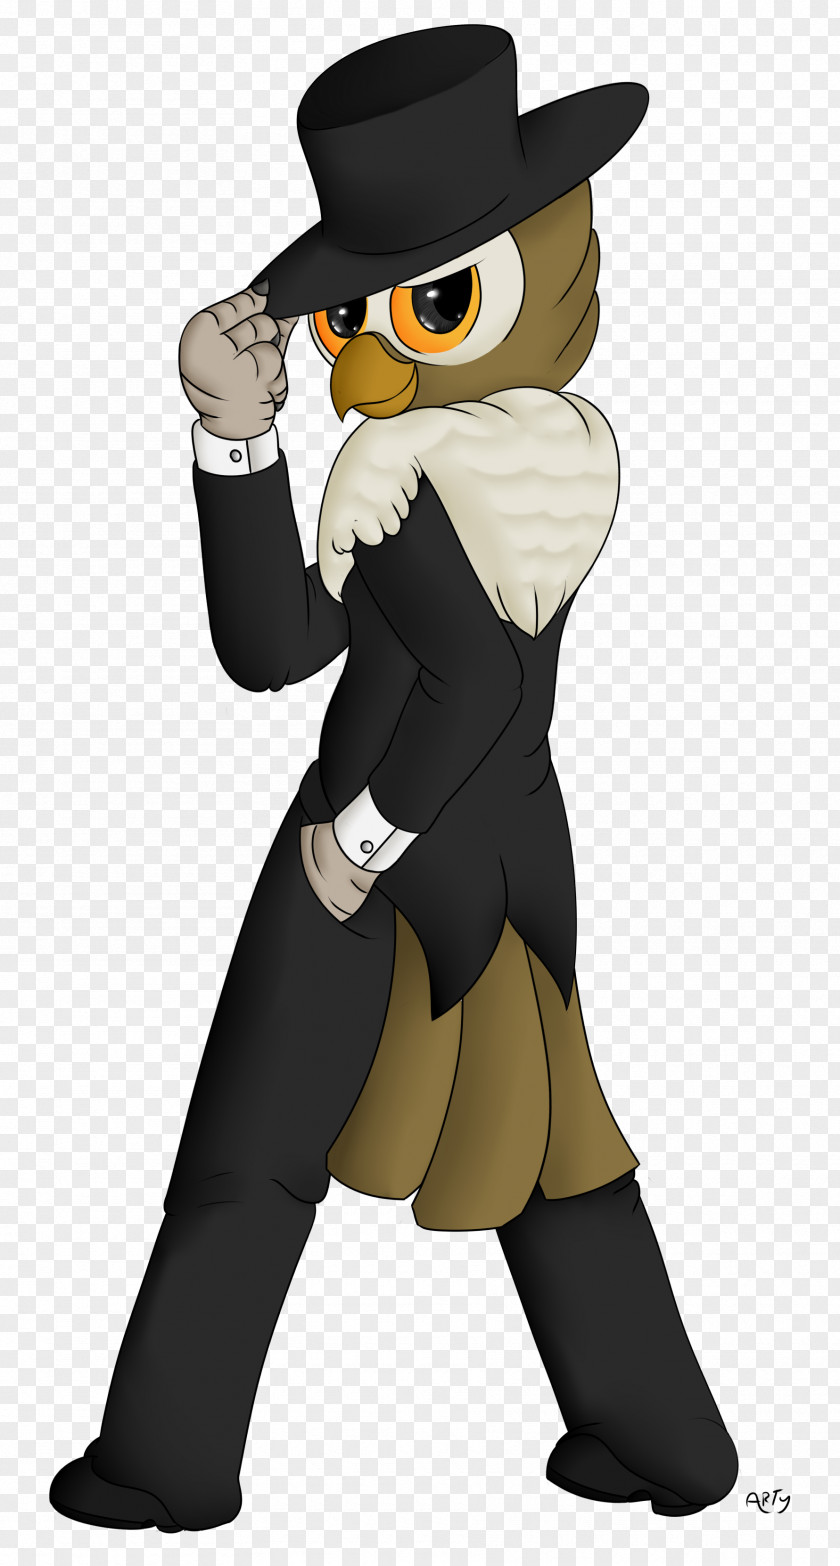 Bird Flightless Illustration Mascot Character PNG